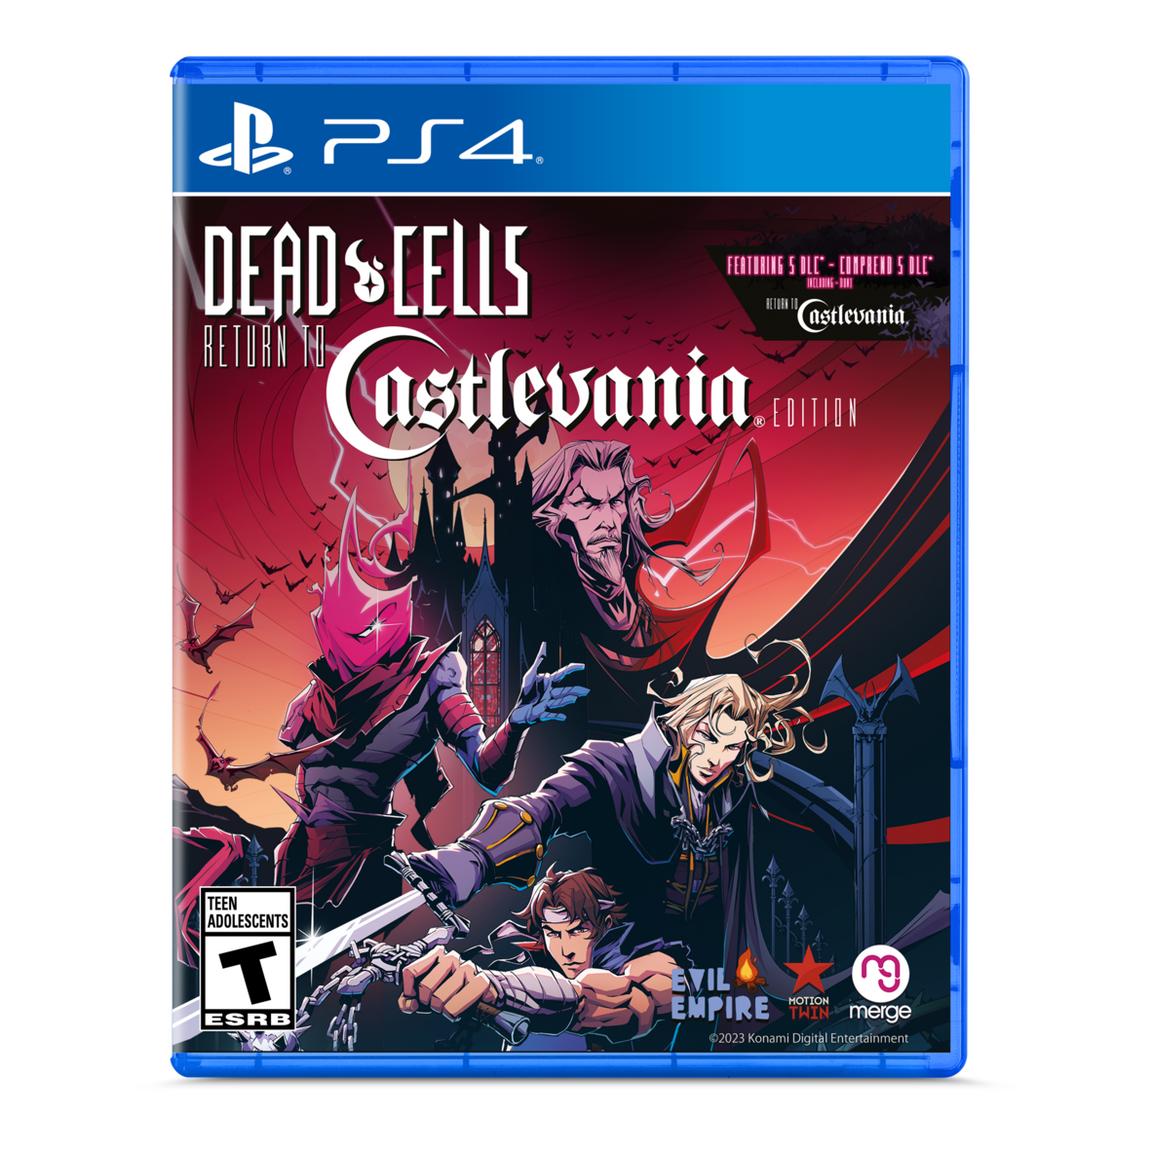 Видеоигра Dead Cells: Return to Castlevania Edition - PlayStation 4